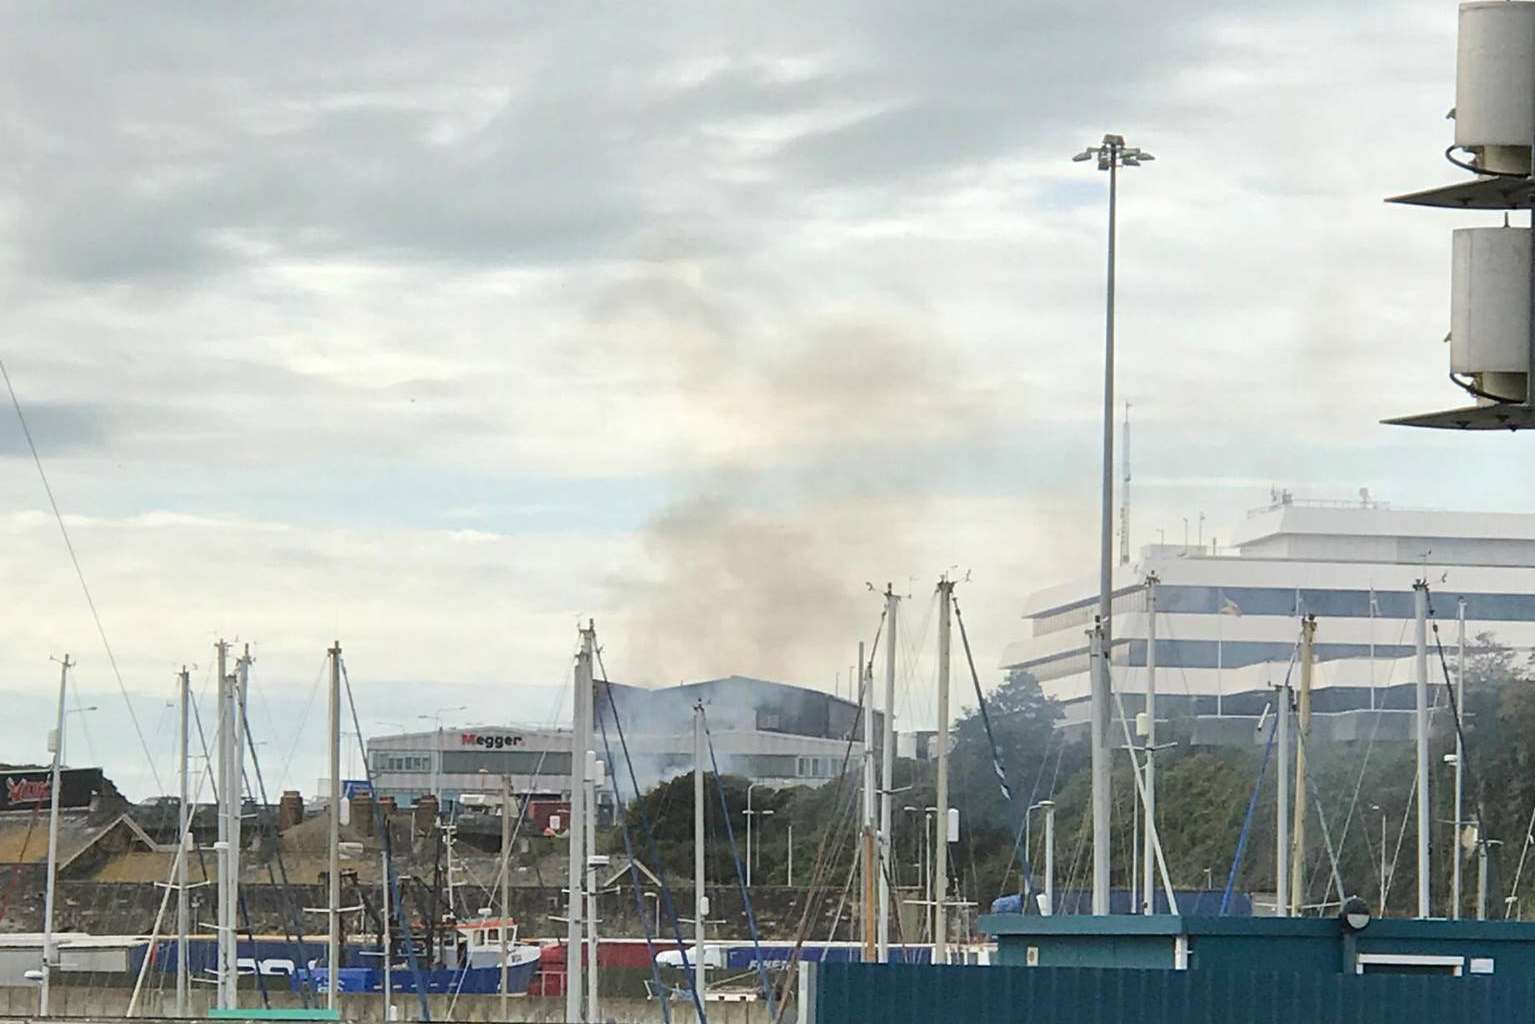 Smoke was seen across the marina. Picture: David Joseph Wright